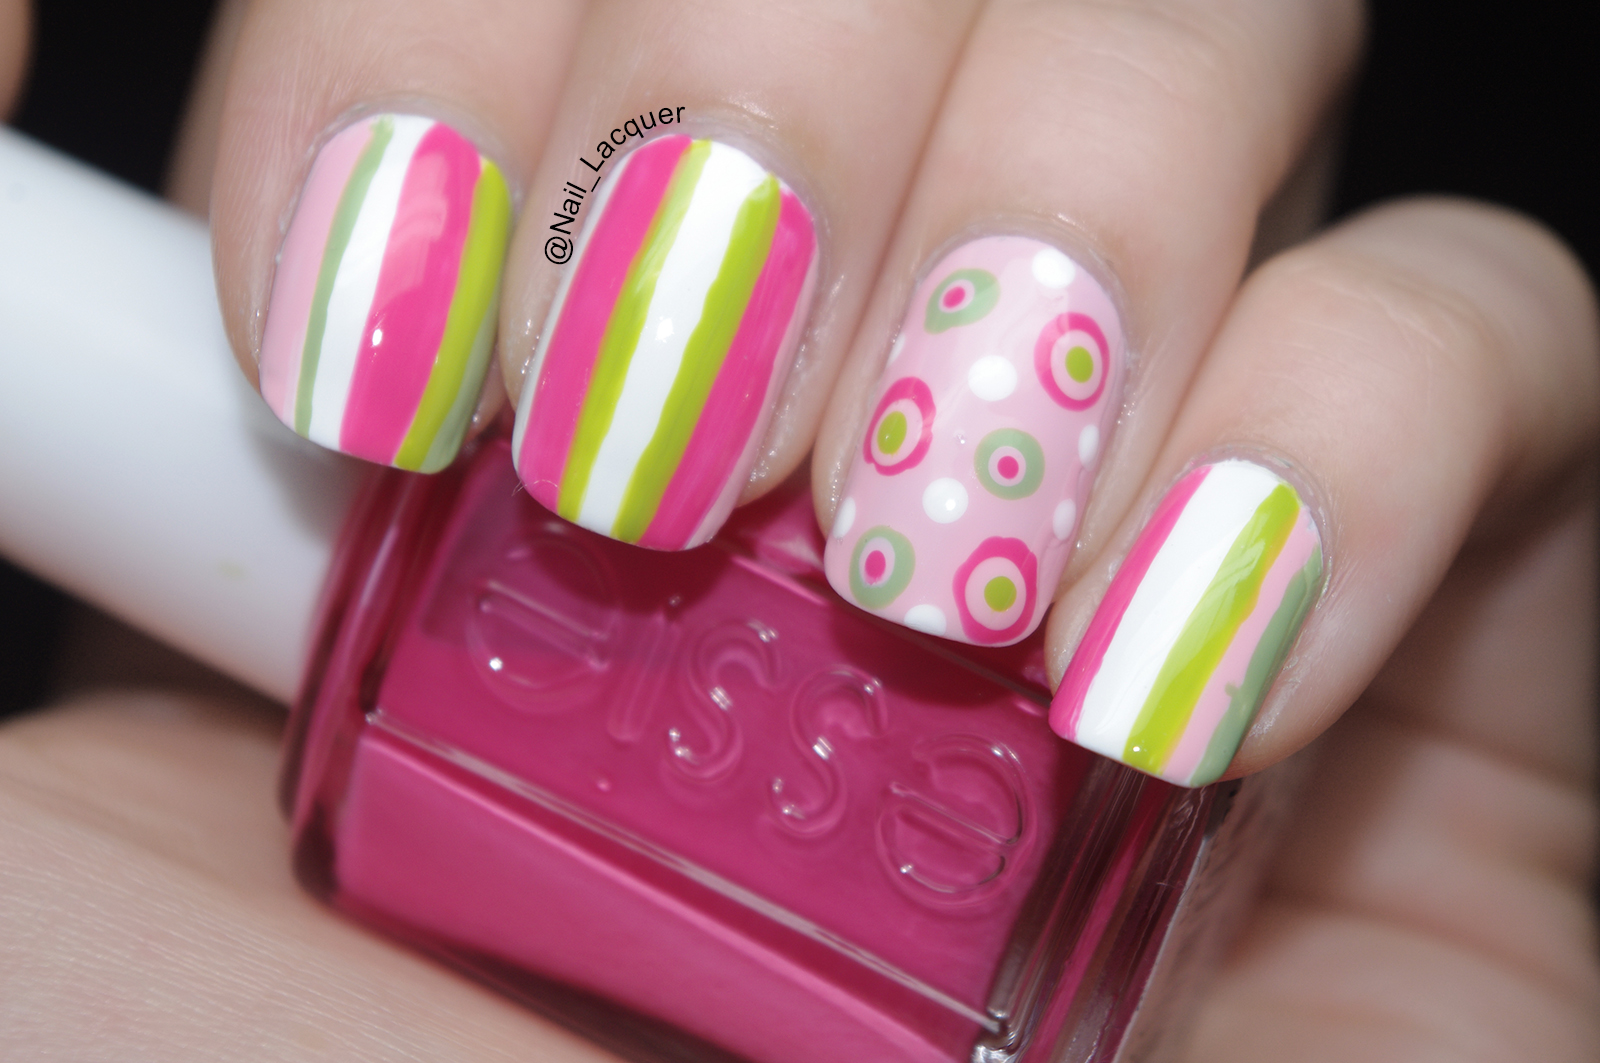 nail design dots and stripes